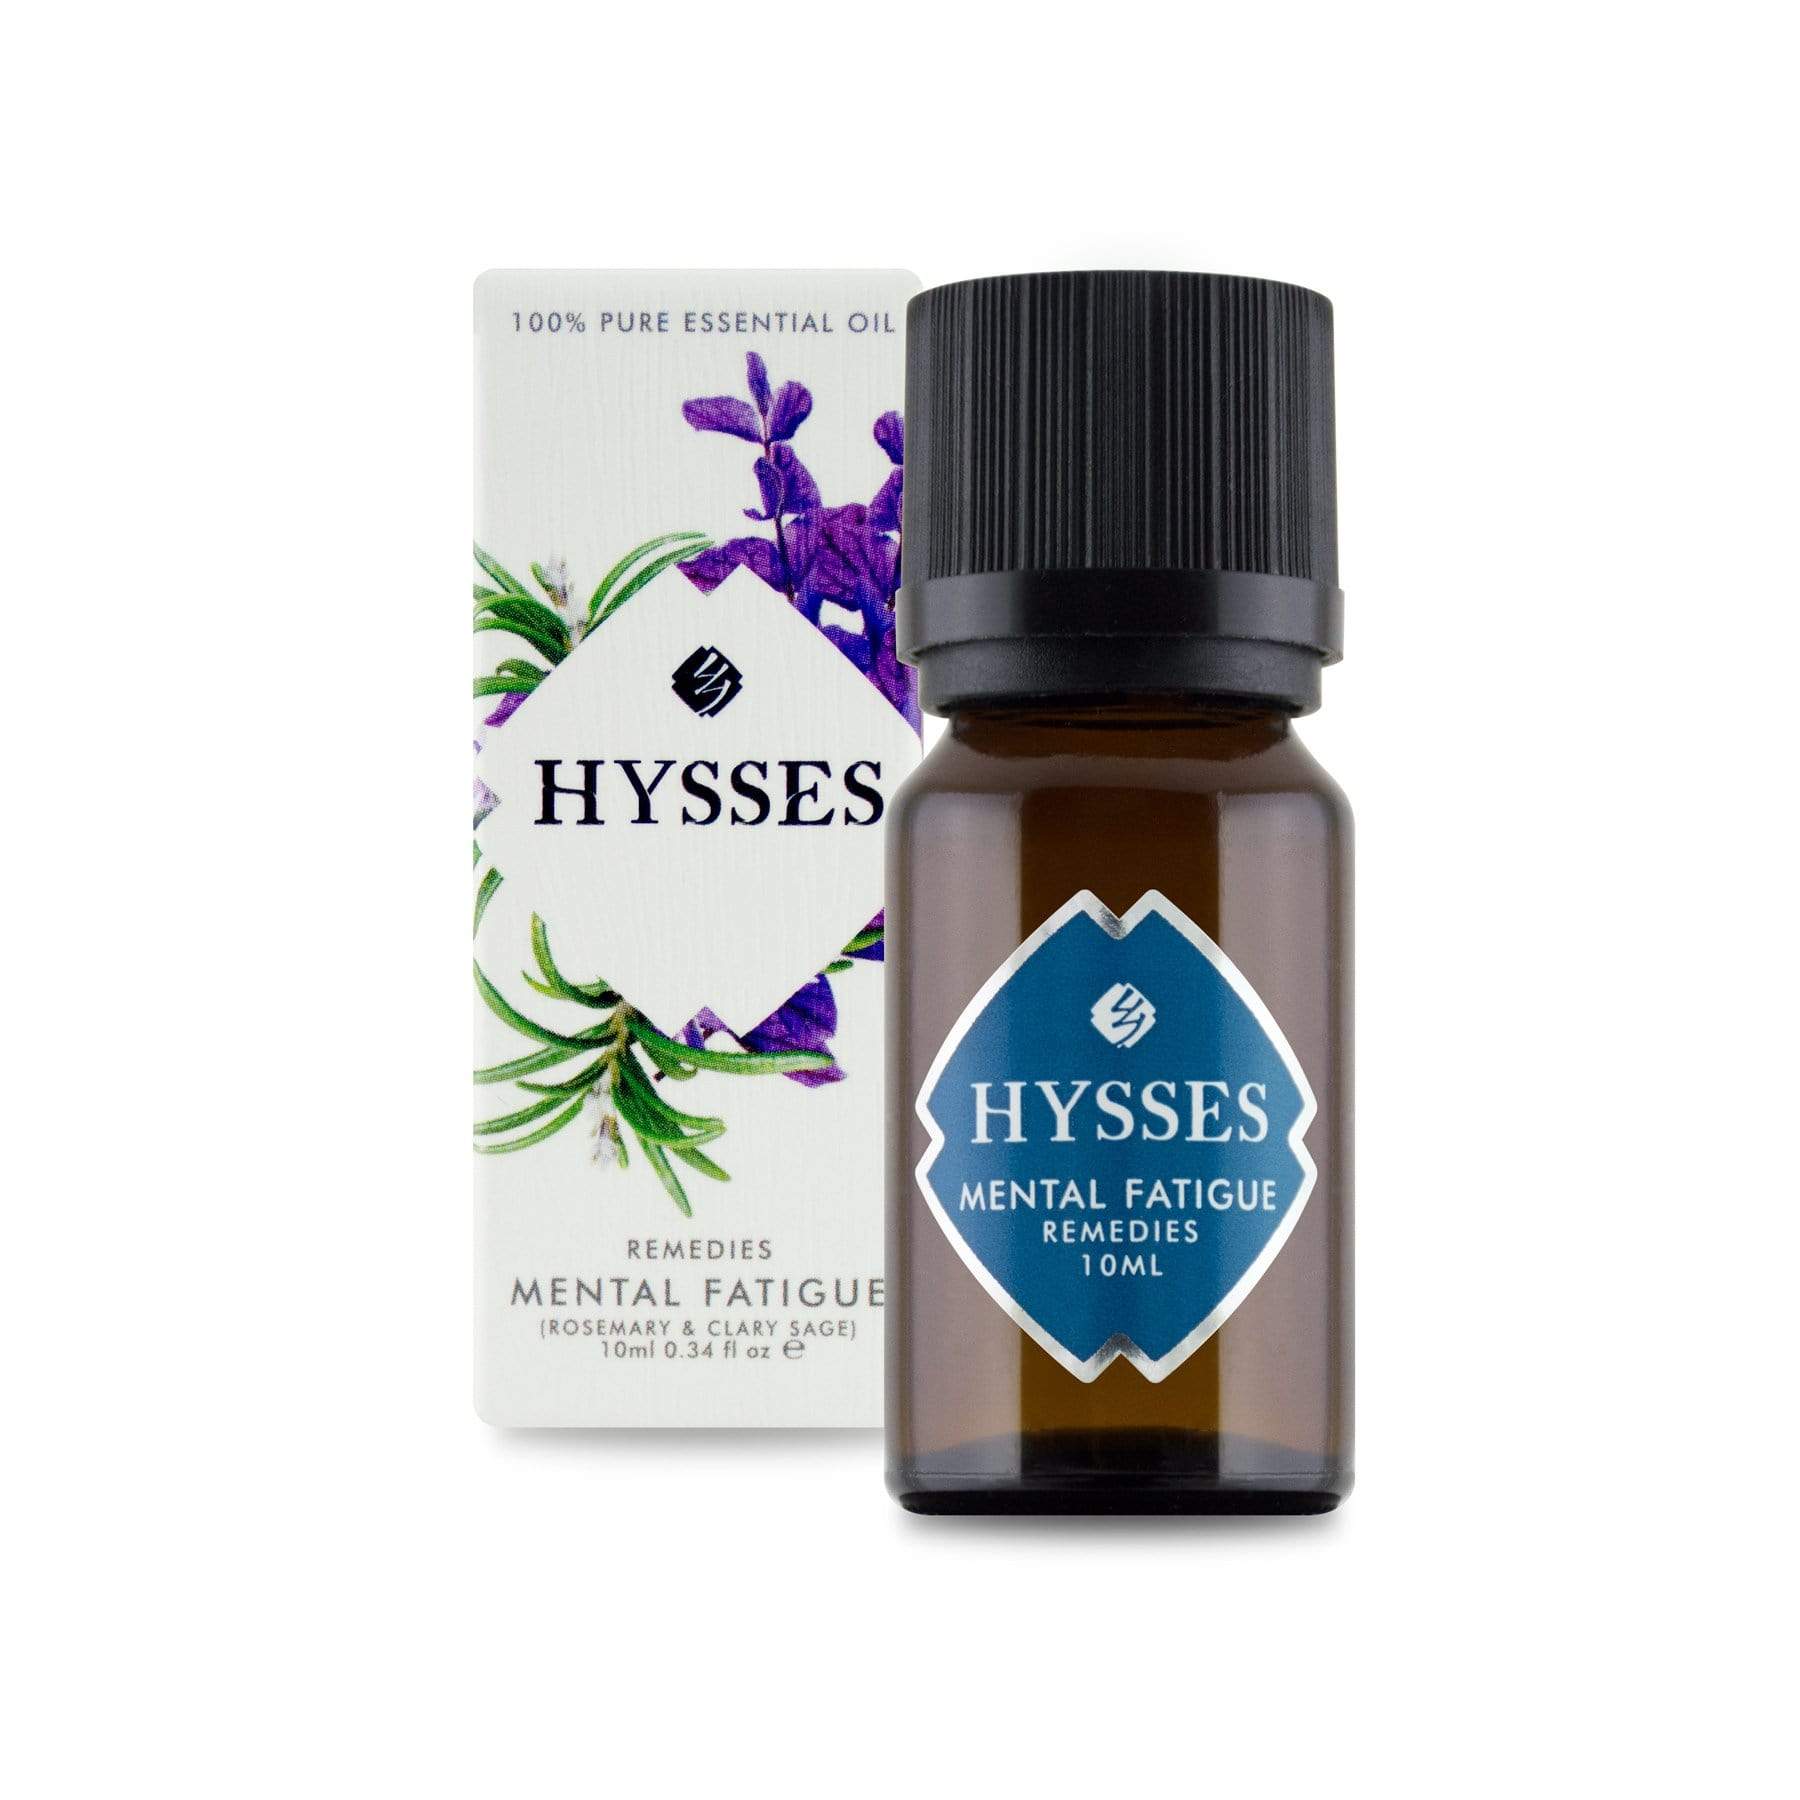 Hysses Essential Oil 10ml Remedies, Mental Fatigue